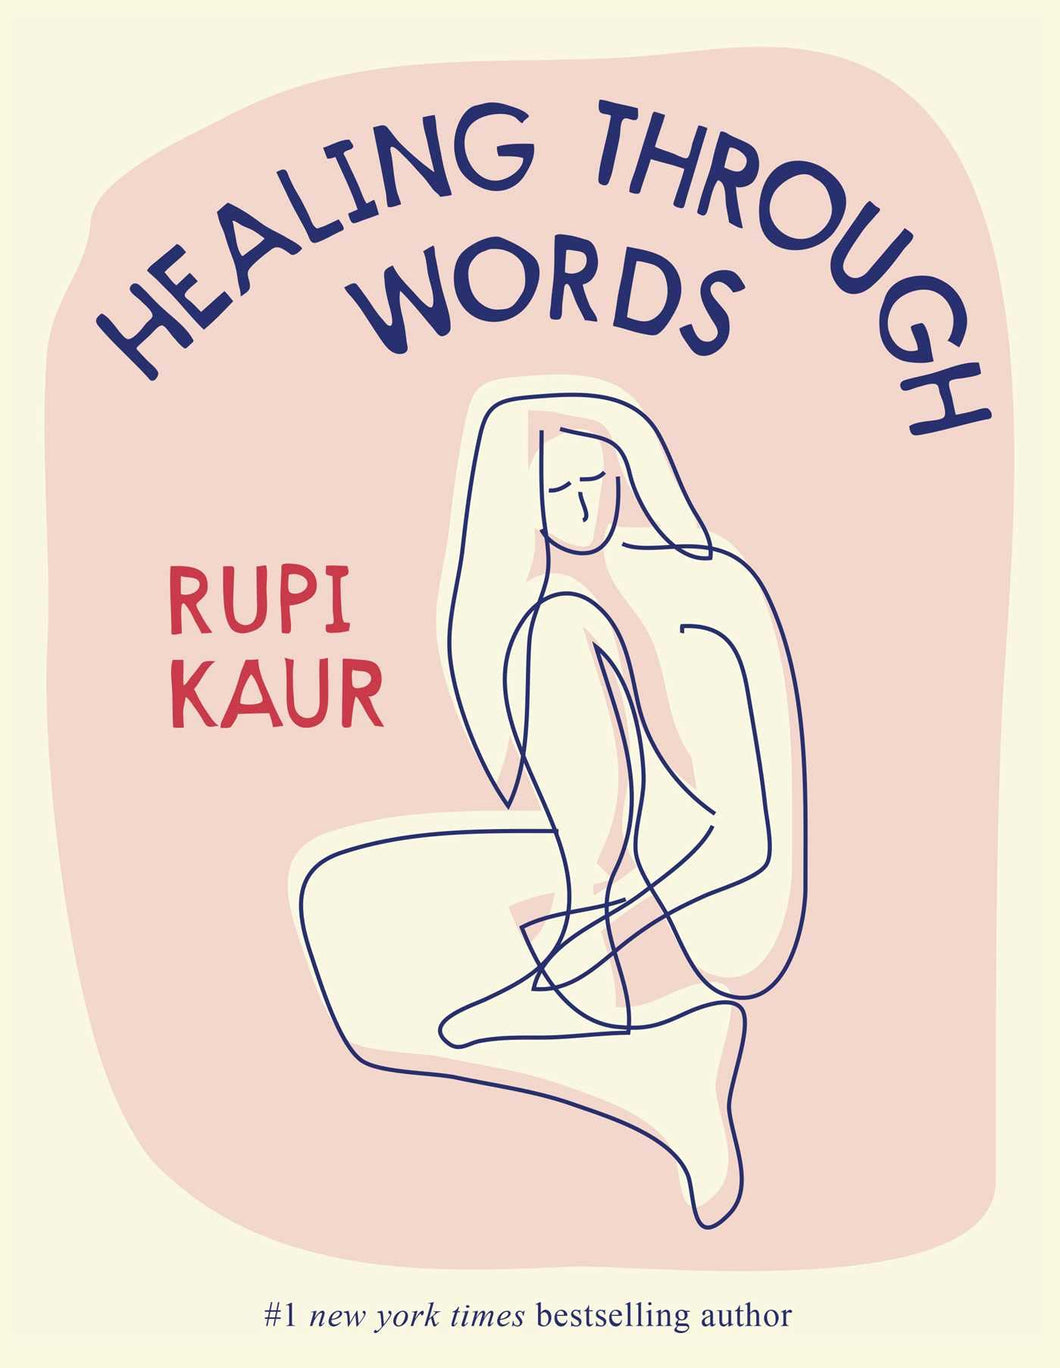 Healing Through Words [Rupi Kaur]